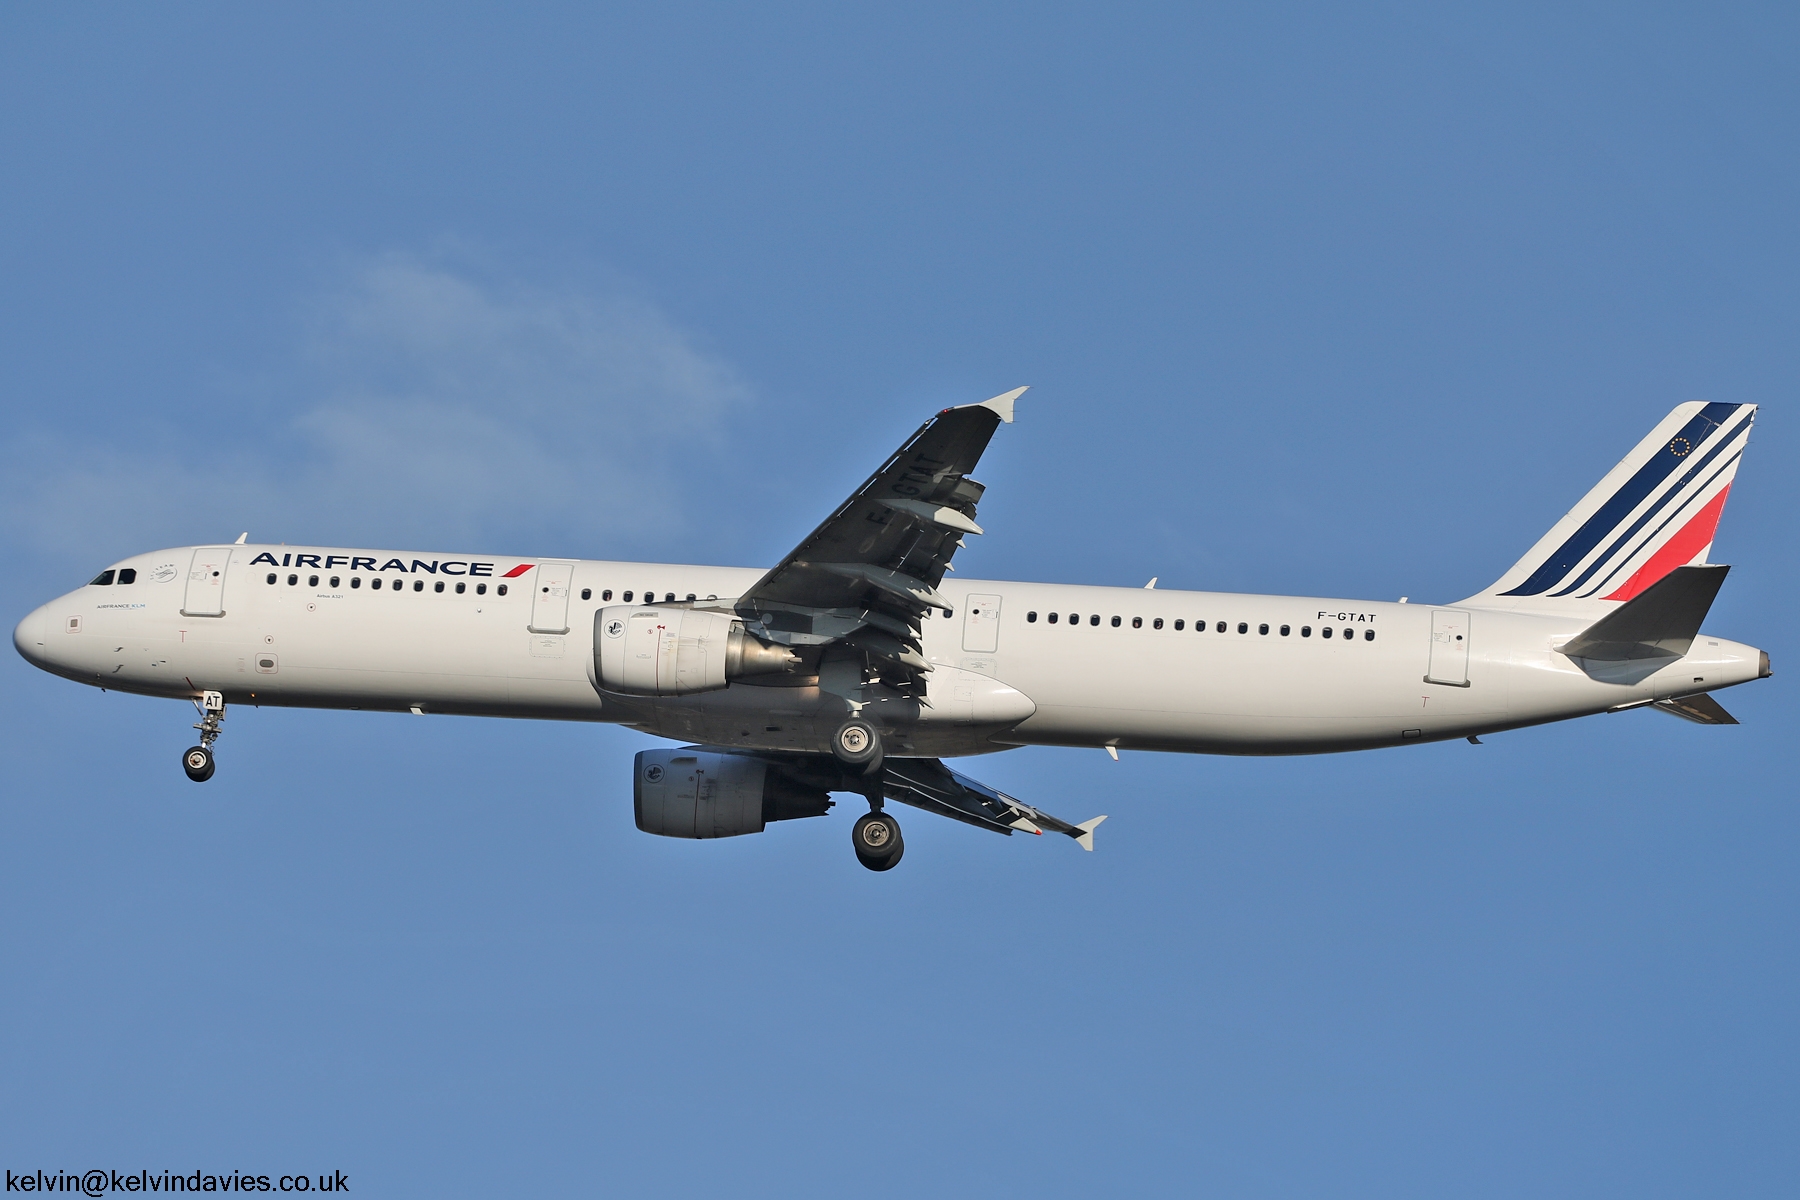 Air France A321 F-GTAT